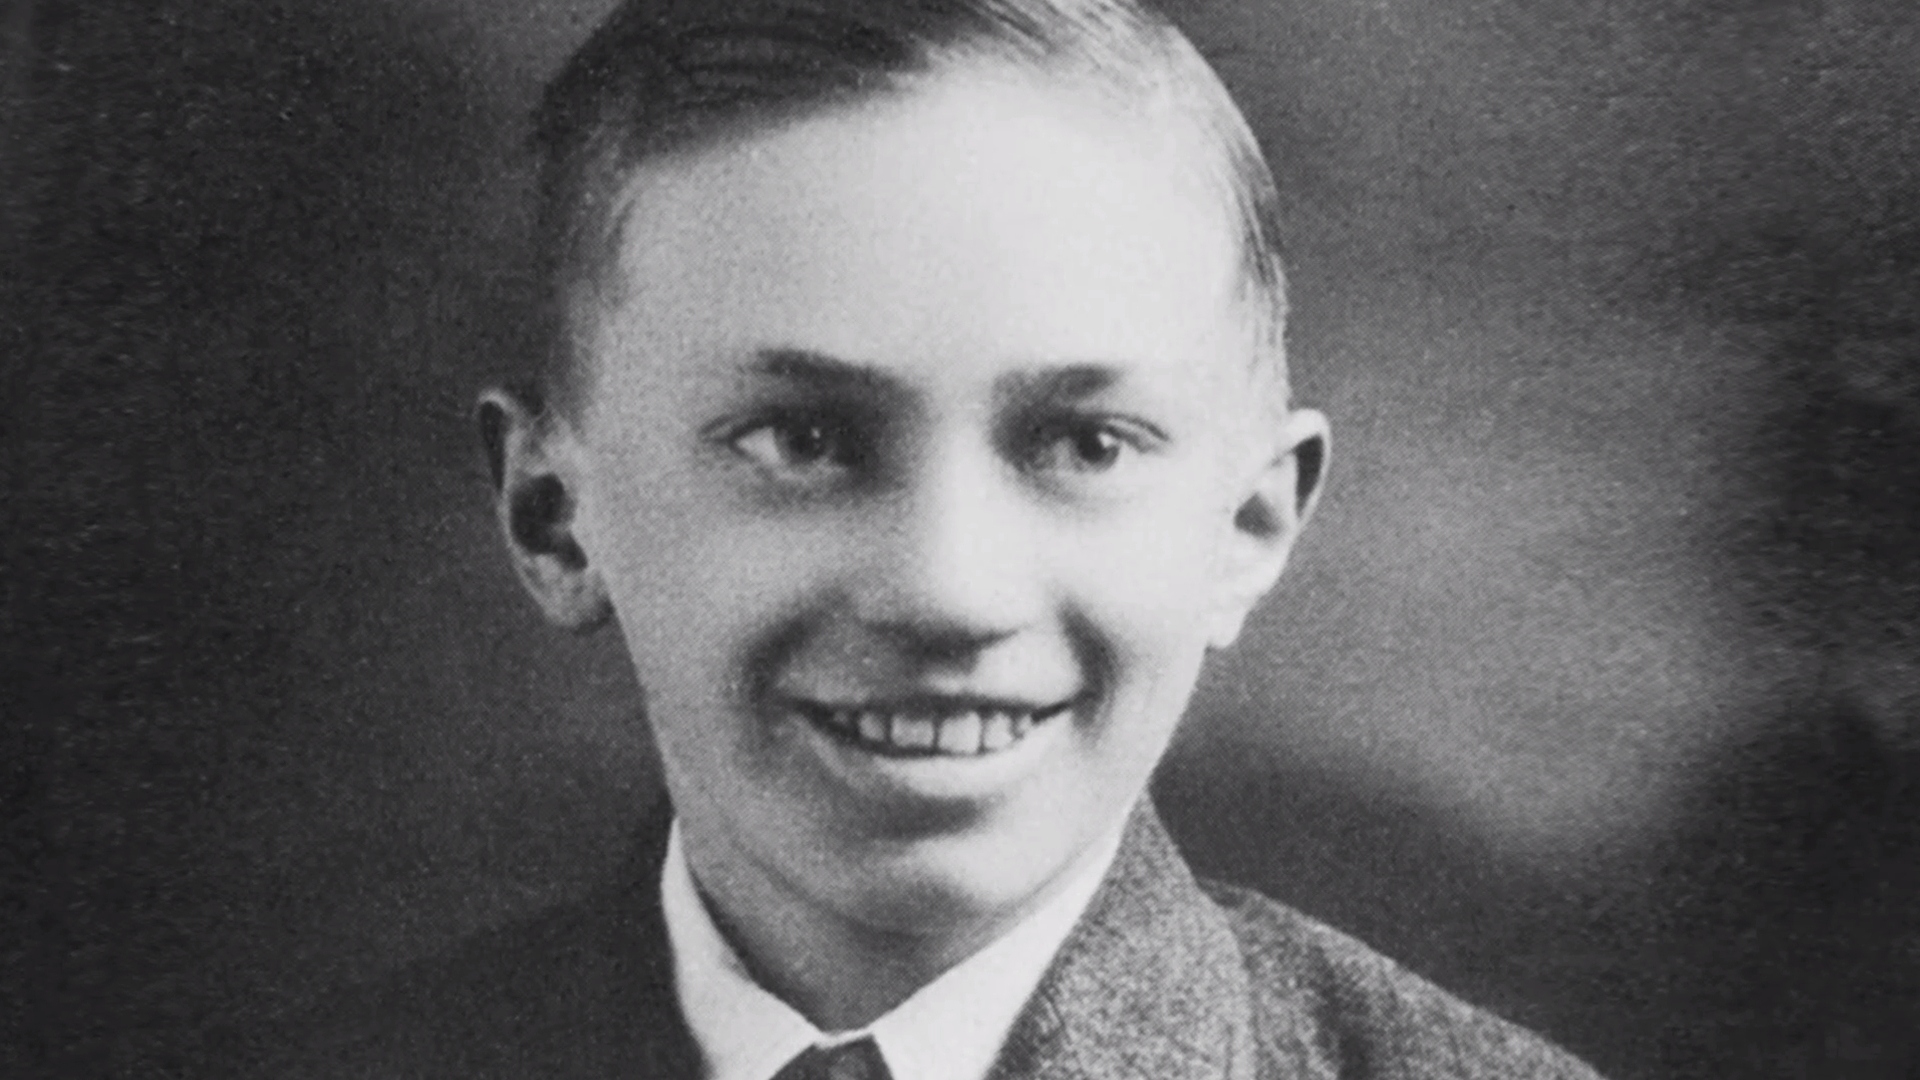 Portrait of Gordon B. Hinckley as a young boy